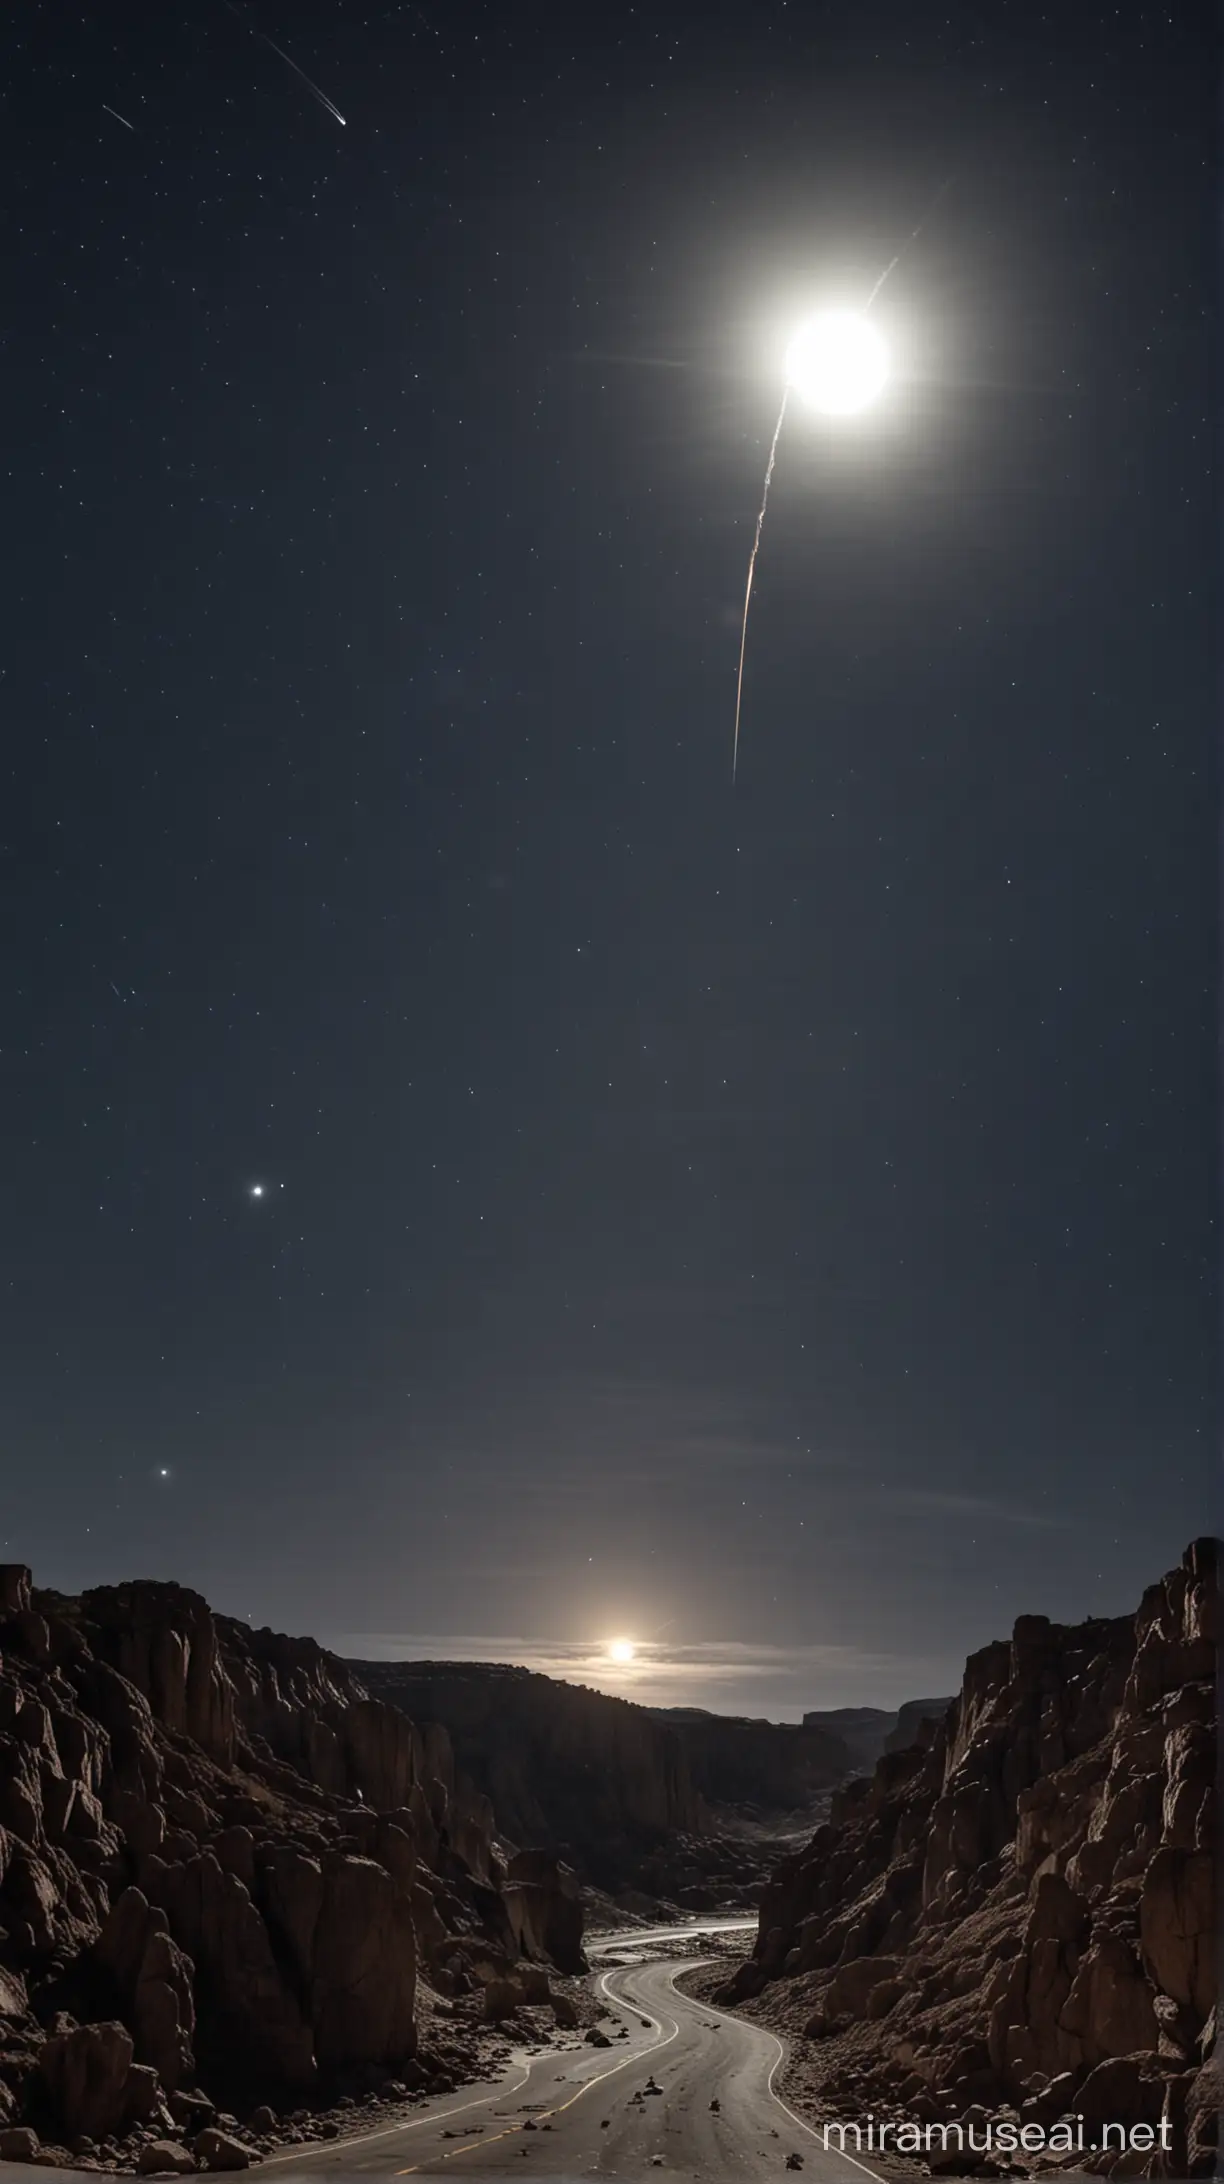 Meteor Passing Full Moon in Night Sky